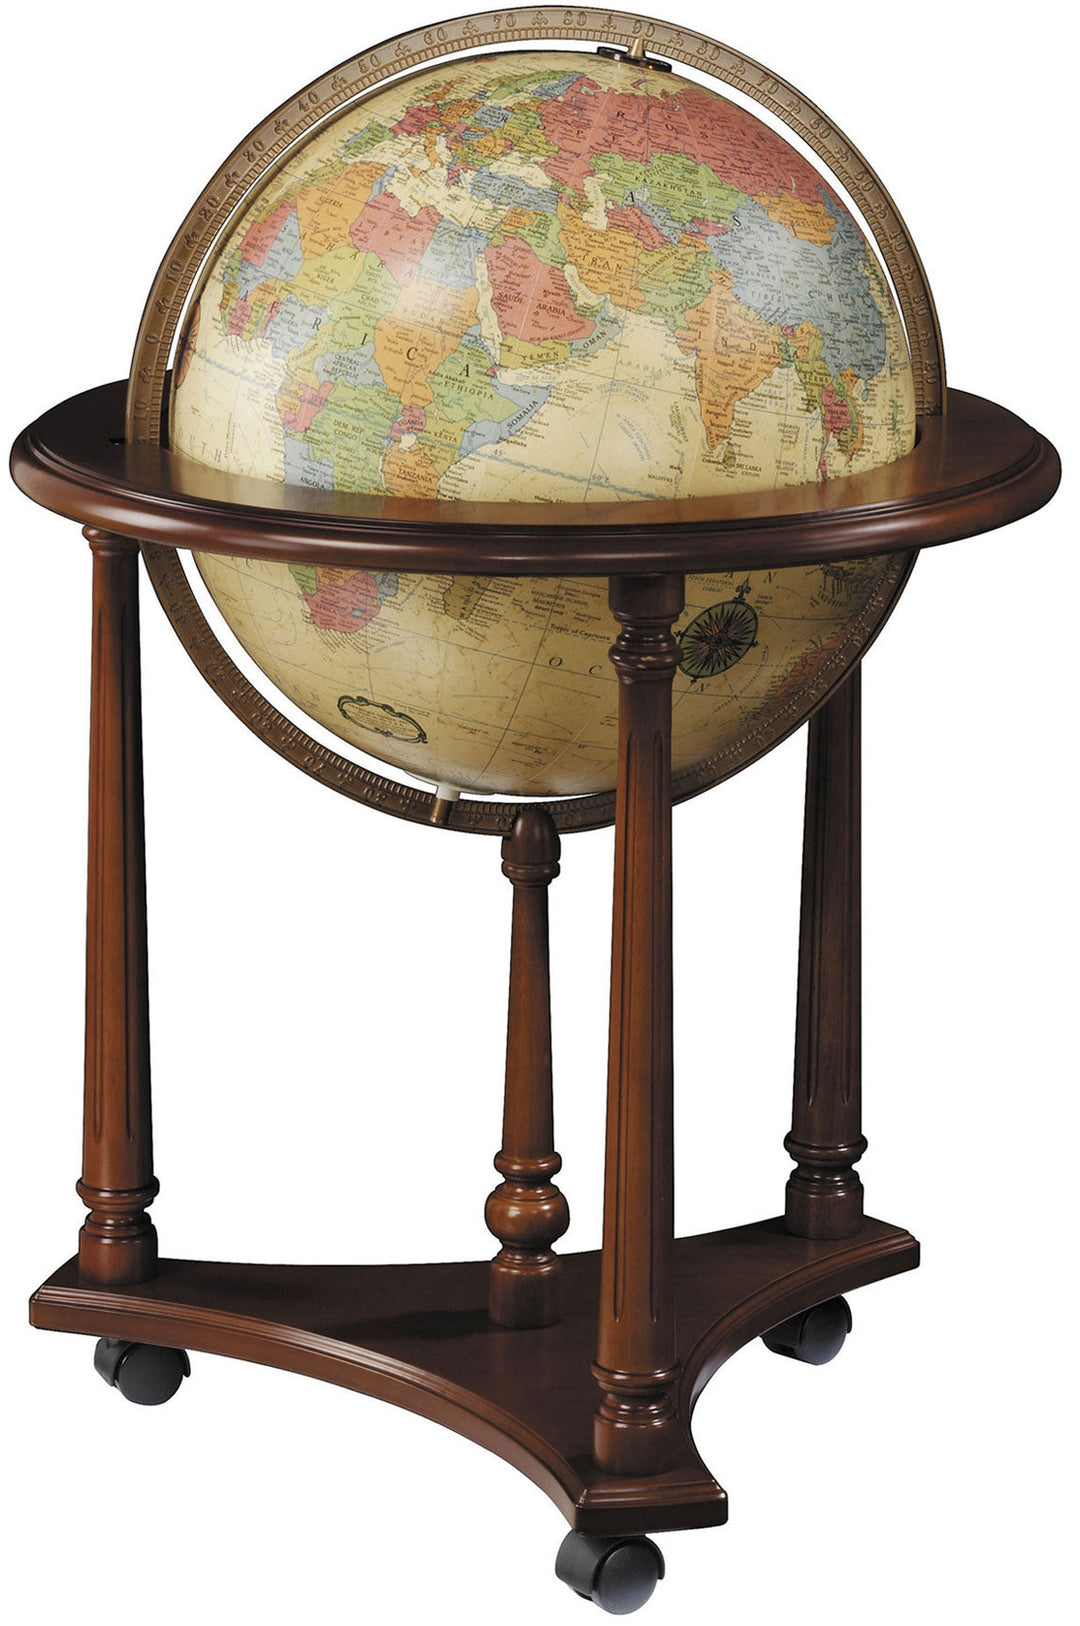 LaFayette Illuminated Floor Globe - Antique by Replogle Globes